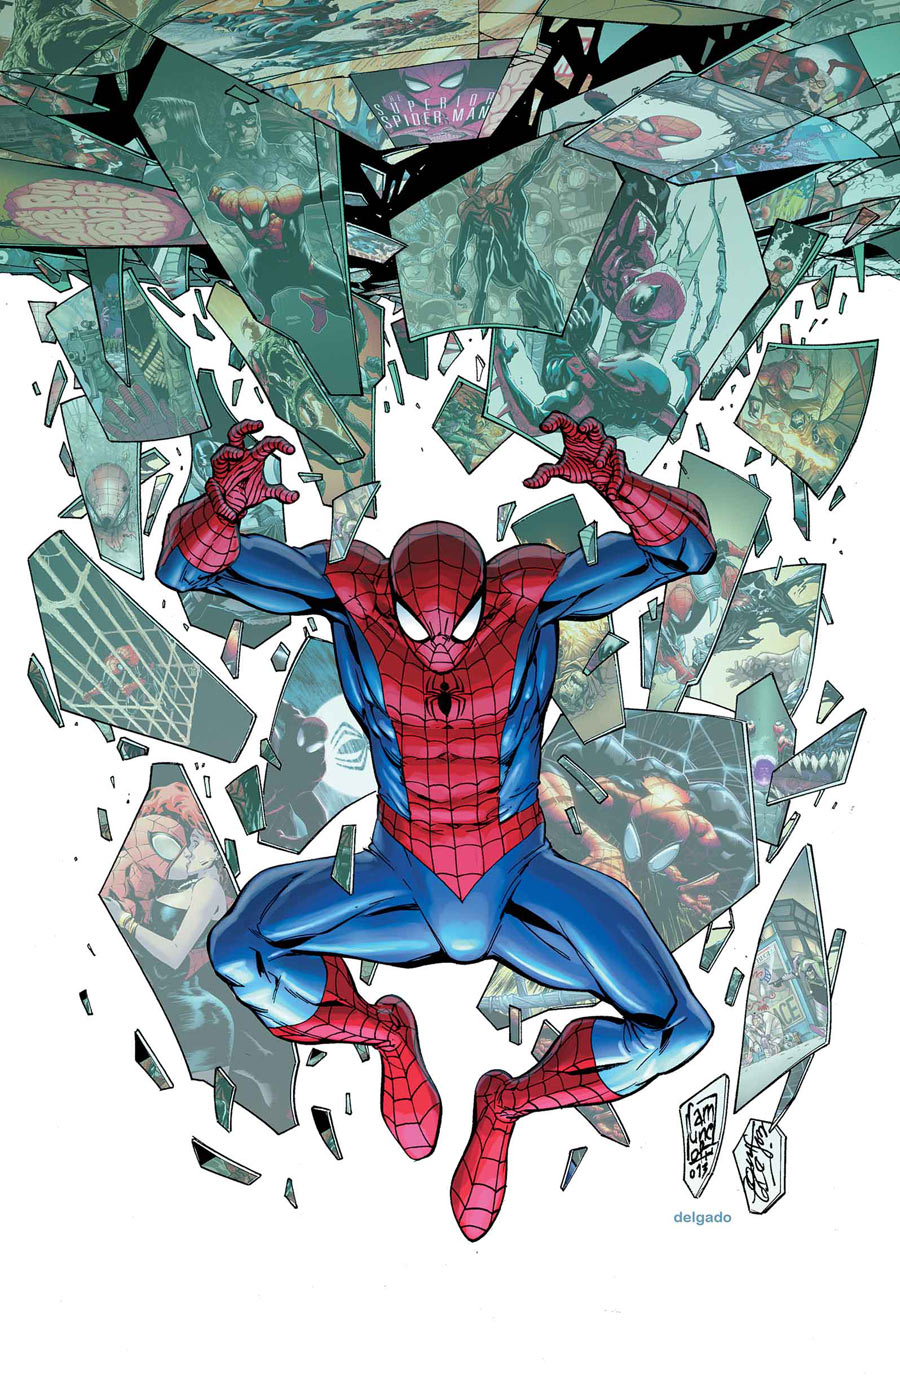 The Sensational Spider-Man (vol. 2) - Wikipedia